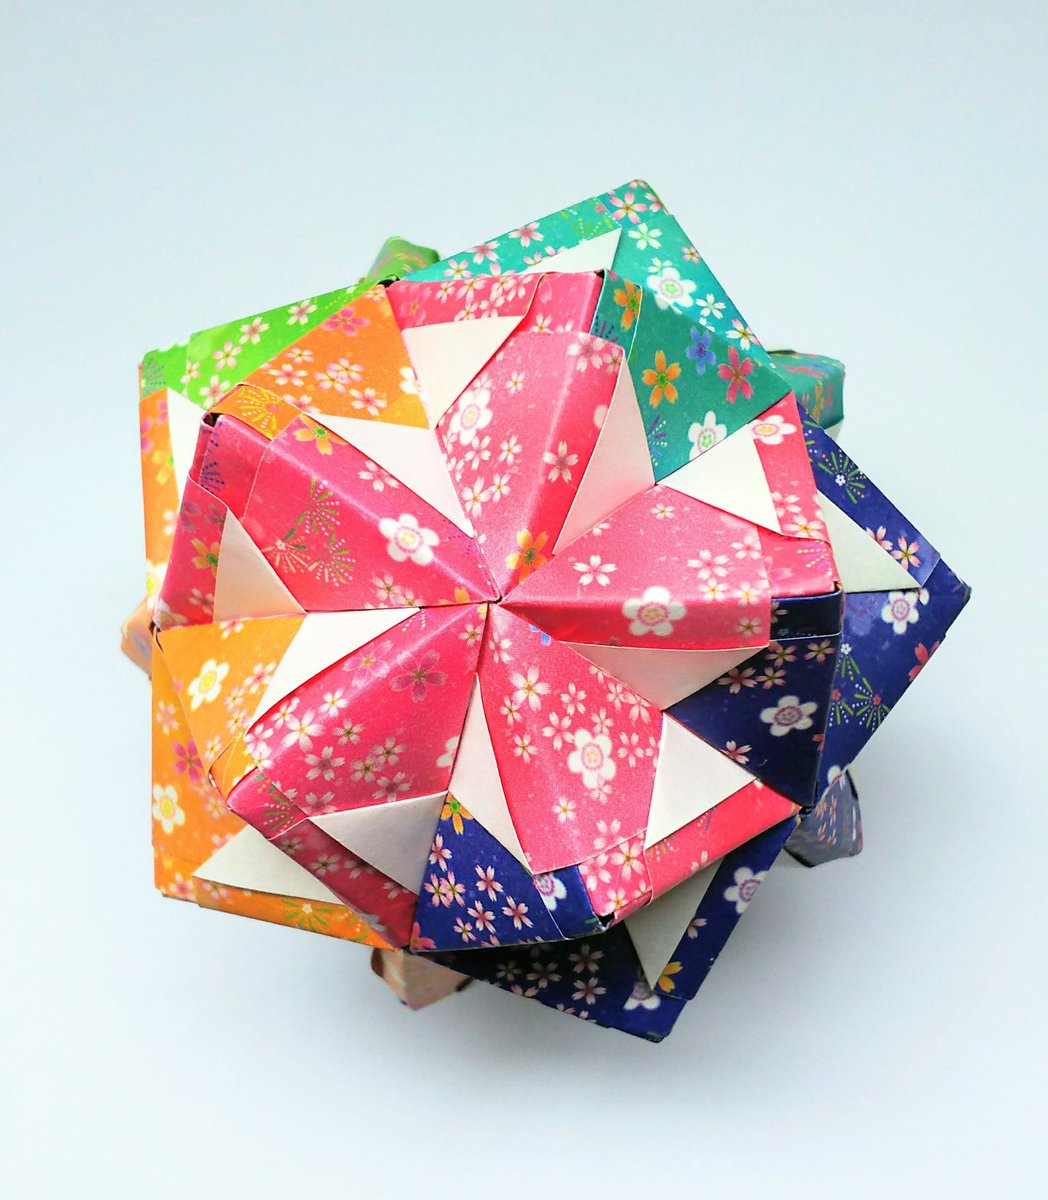 Satoh Hiroko 買った折り紙で作ってみた つがわみお さんの リボン ユニット折り紙 ３０枚組 折り紙 折り紙作品 おりがみ Origami Origamipaper Claft